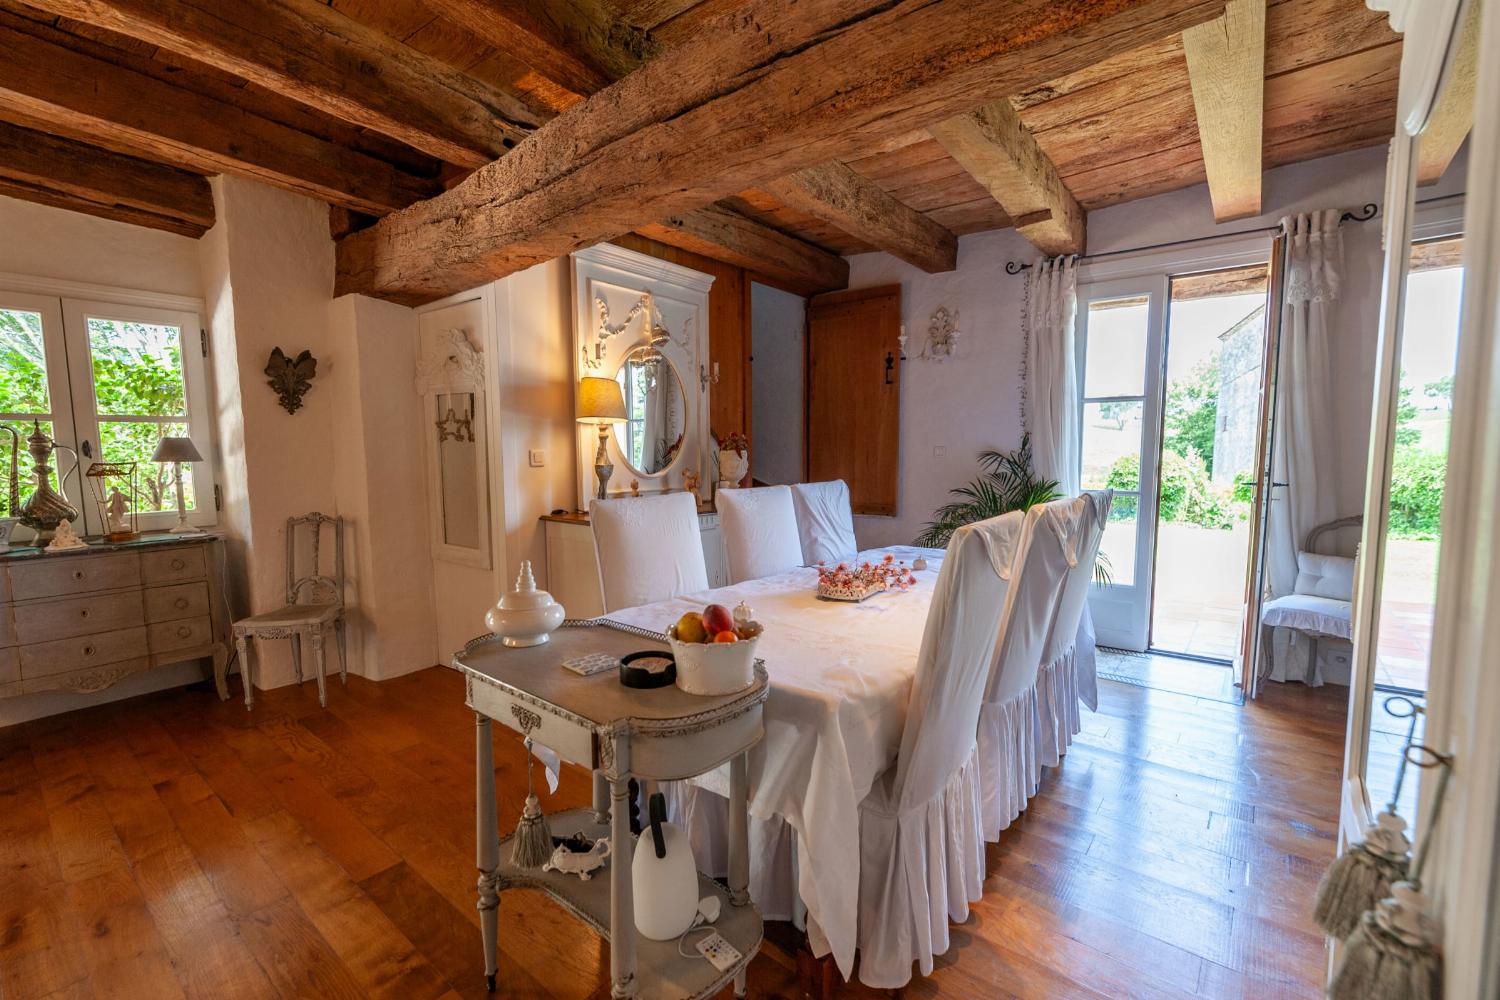 Dining room | Rental home in Lot-et-Garonne